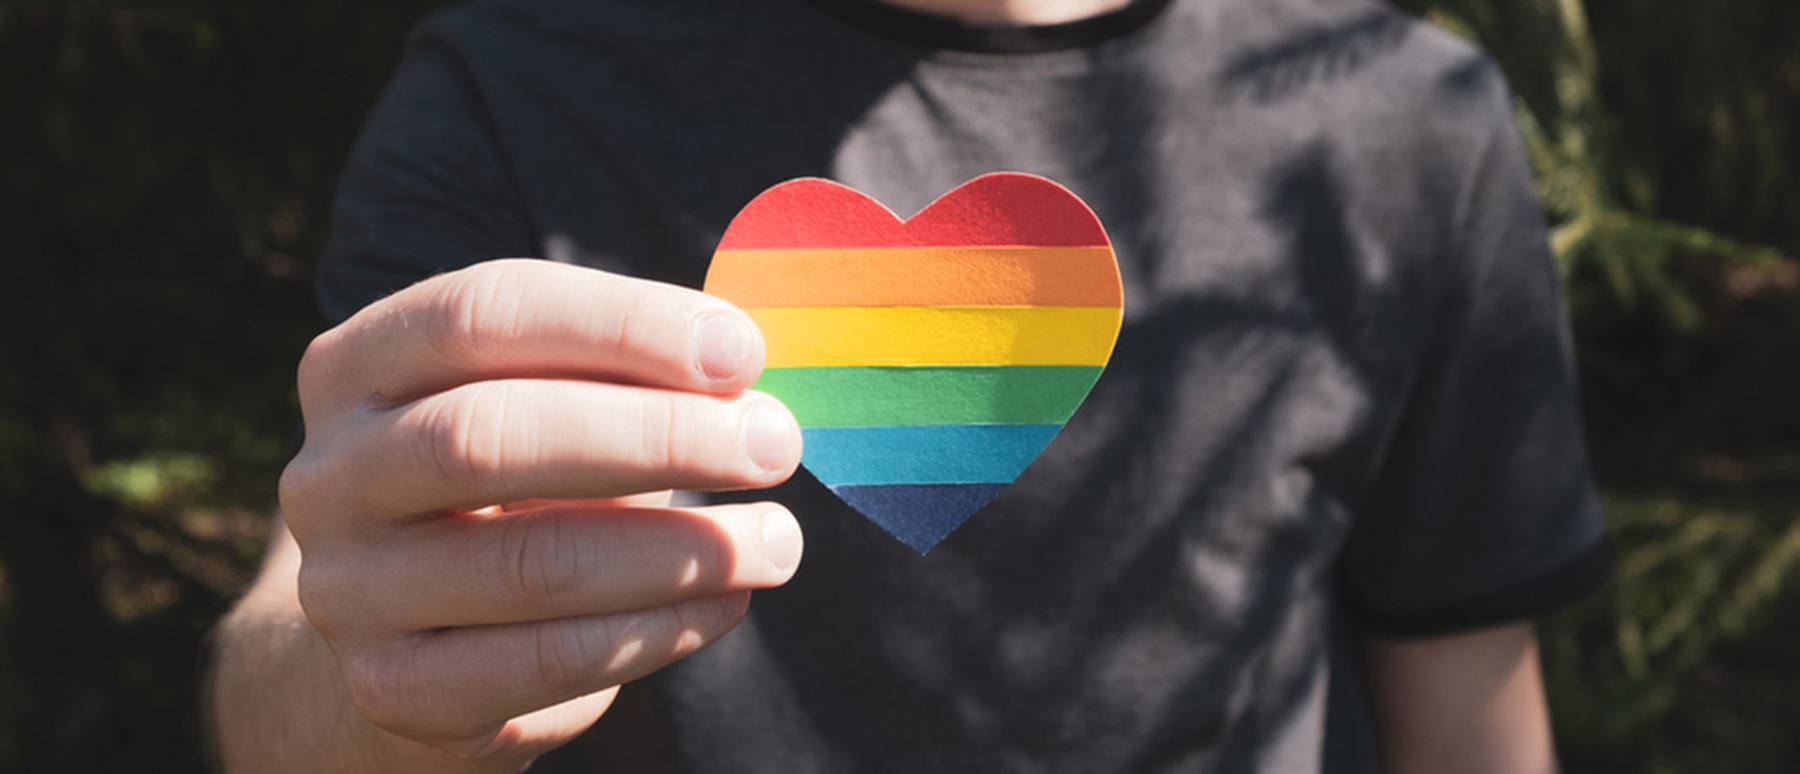 Man holding a rainbow paper heart